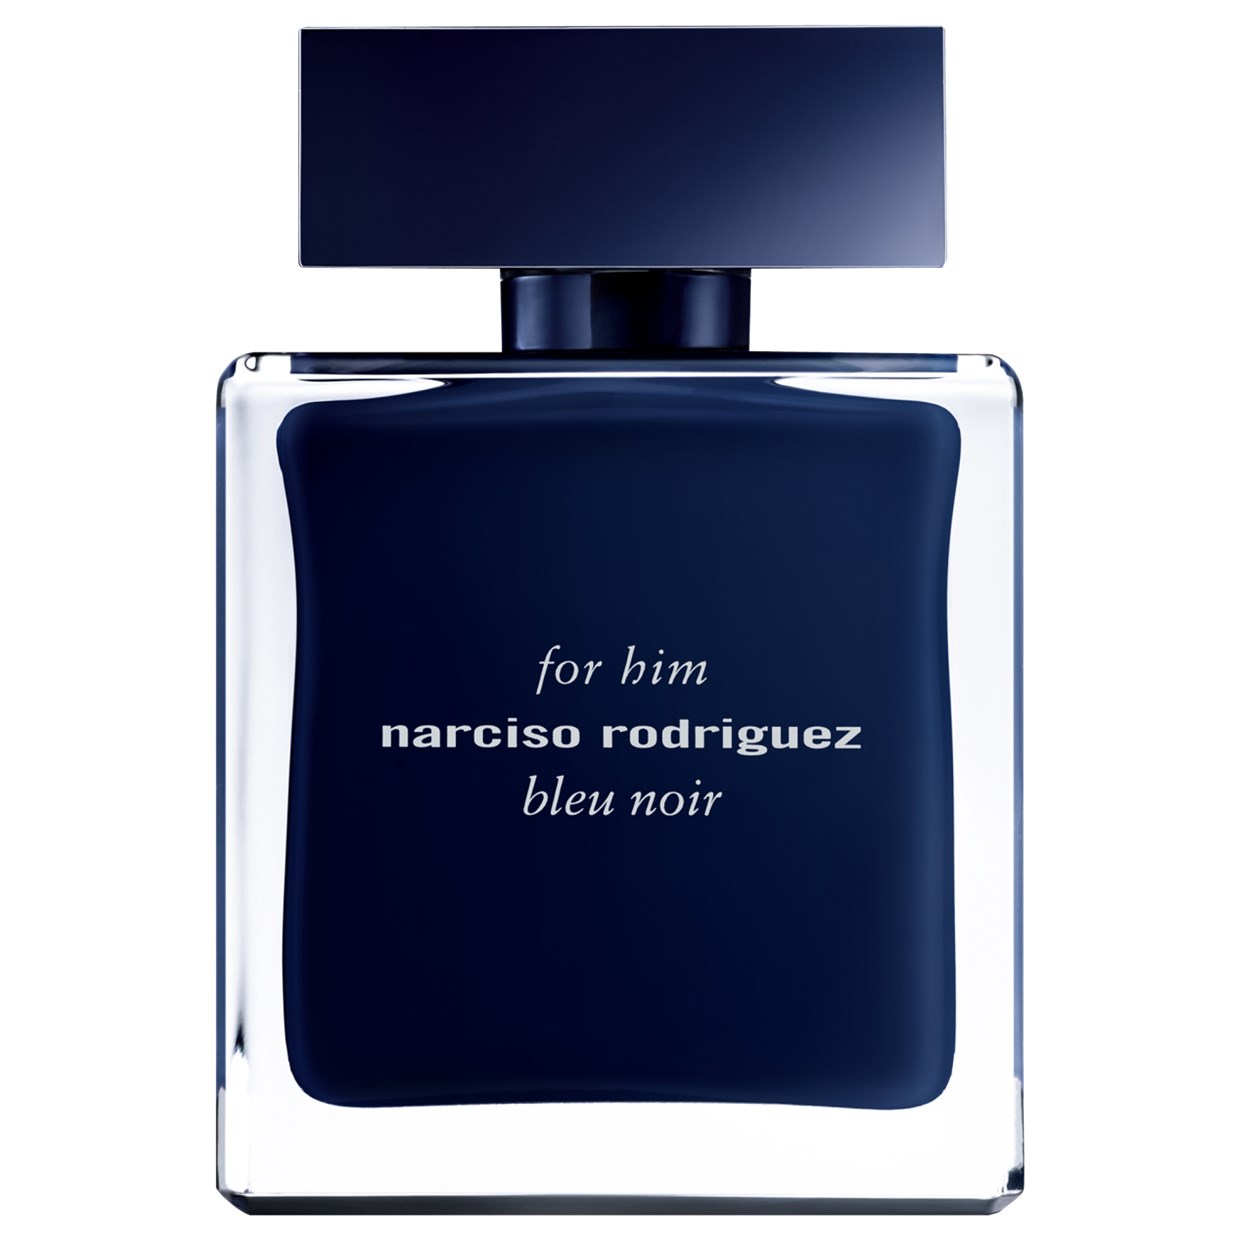 Buy Narciso Rodriguez For Him Bleu Noir Cologne Spray 100 ml